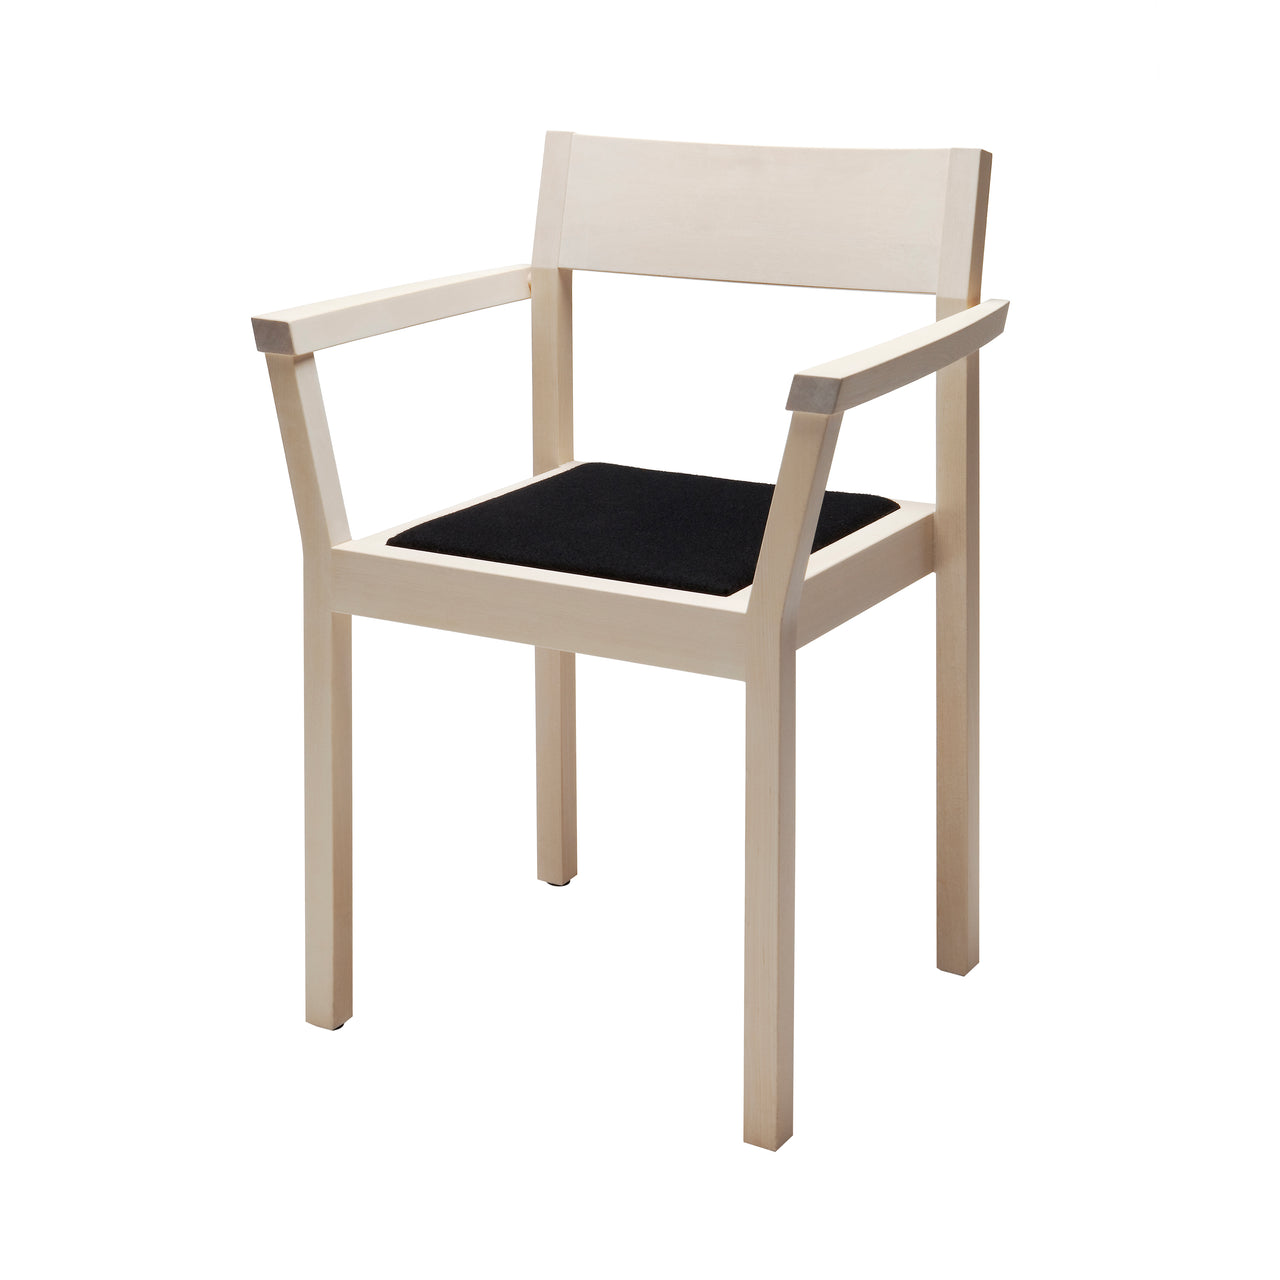 Periferia KVT3 Chair: Upholstered + Birch